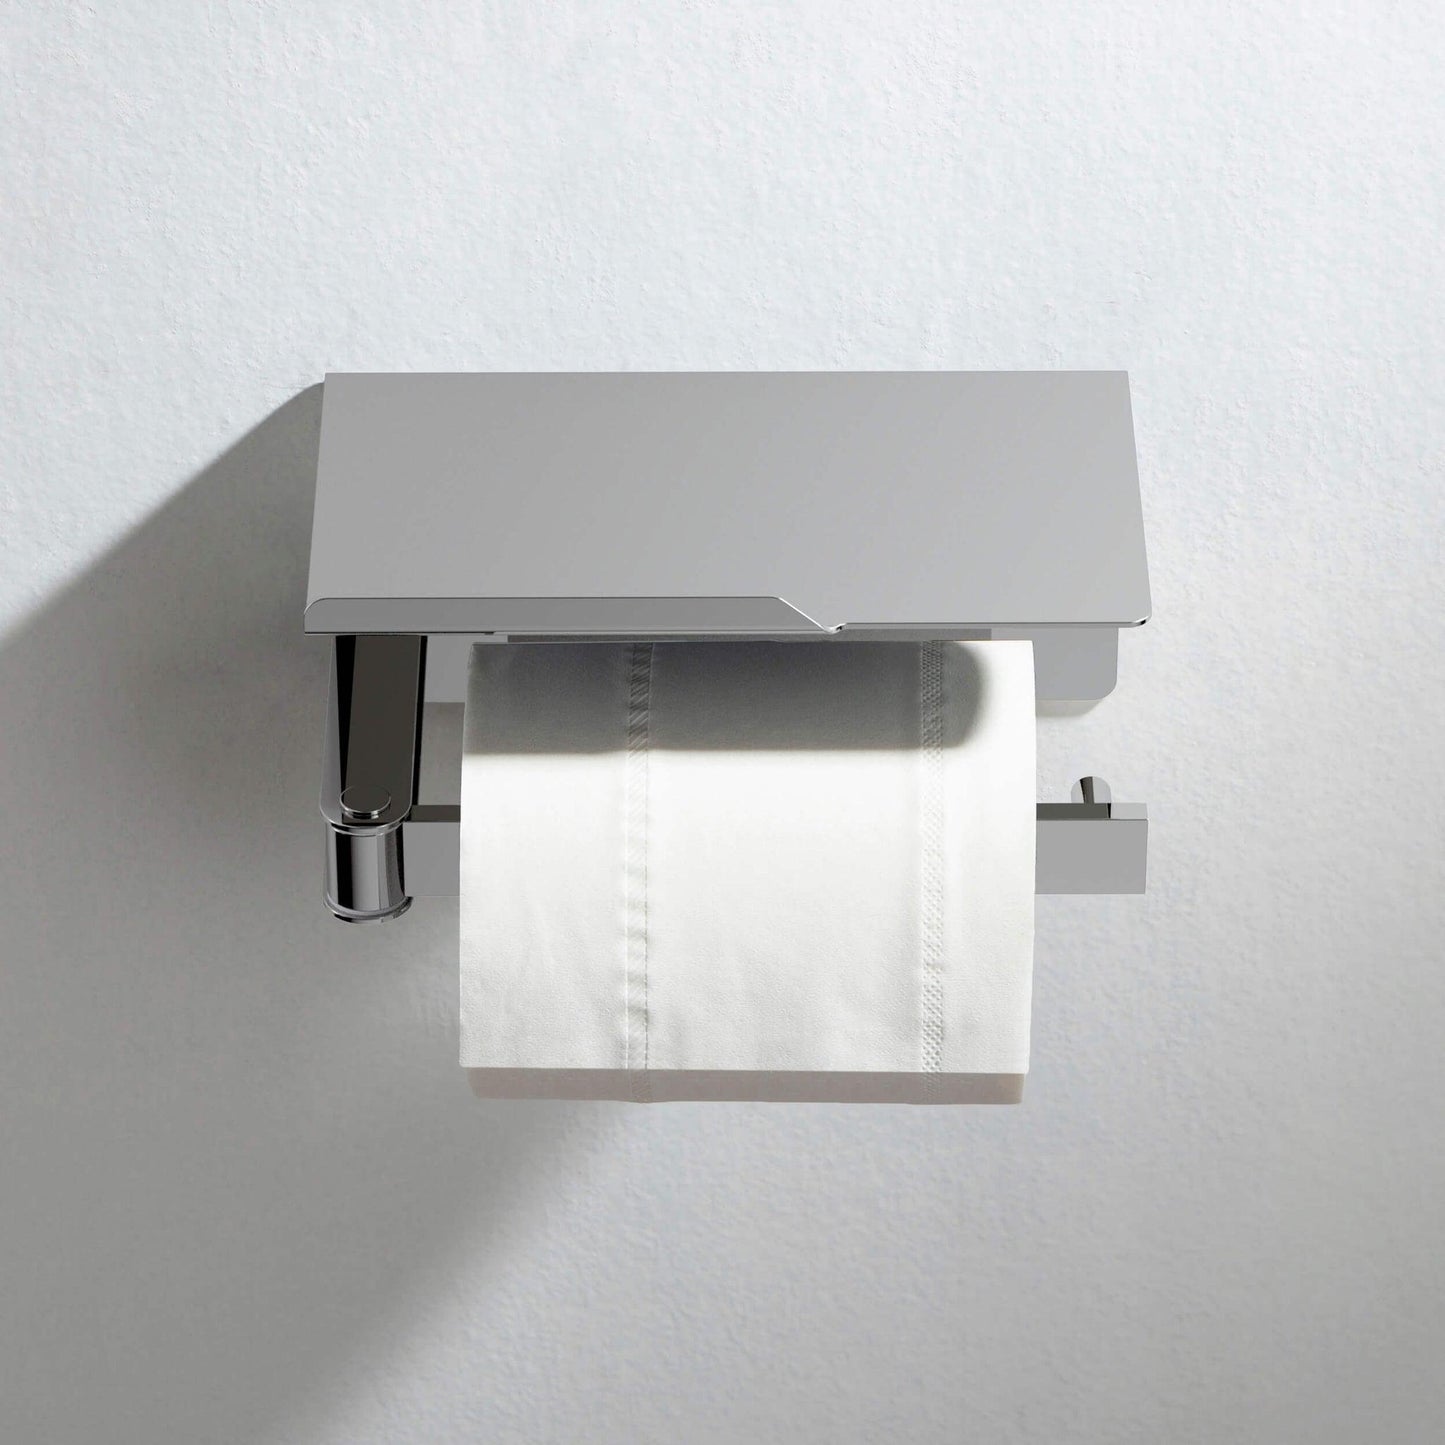 KIBI Deco Bathroom Toilet Paper Holder With Platform in Chrome Finish